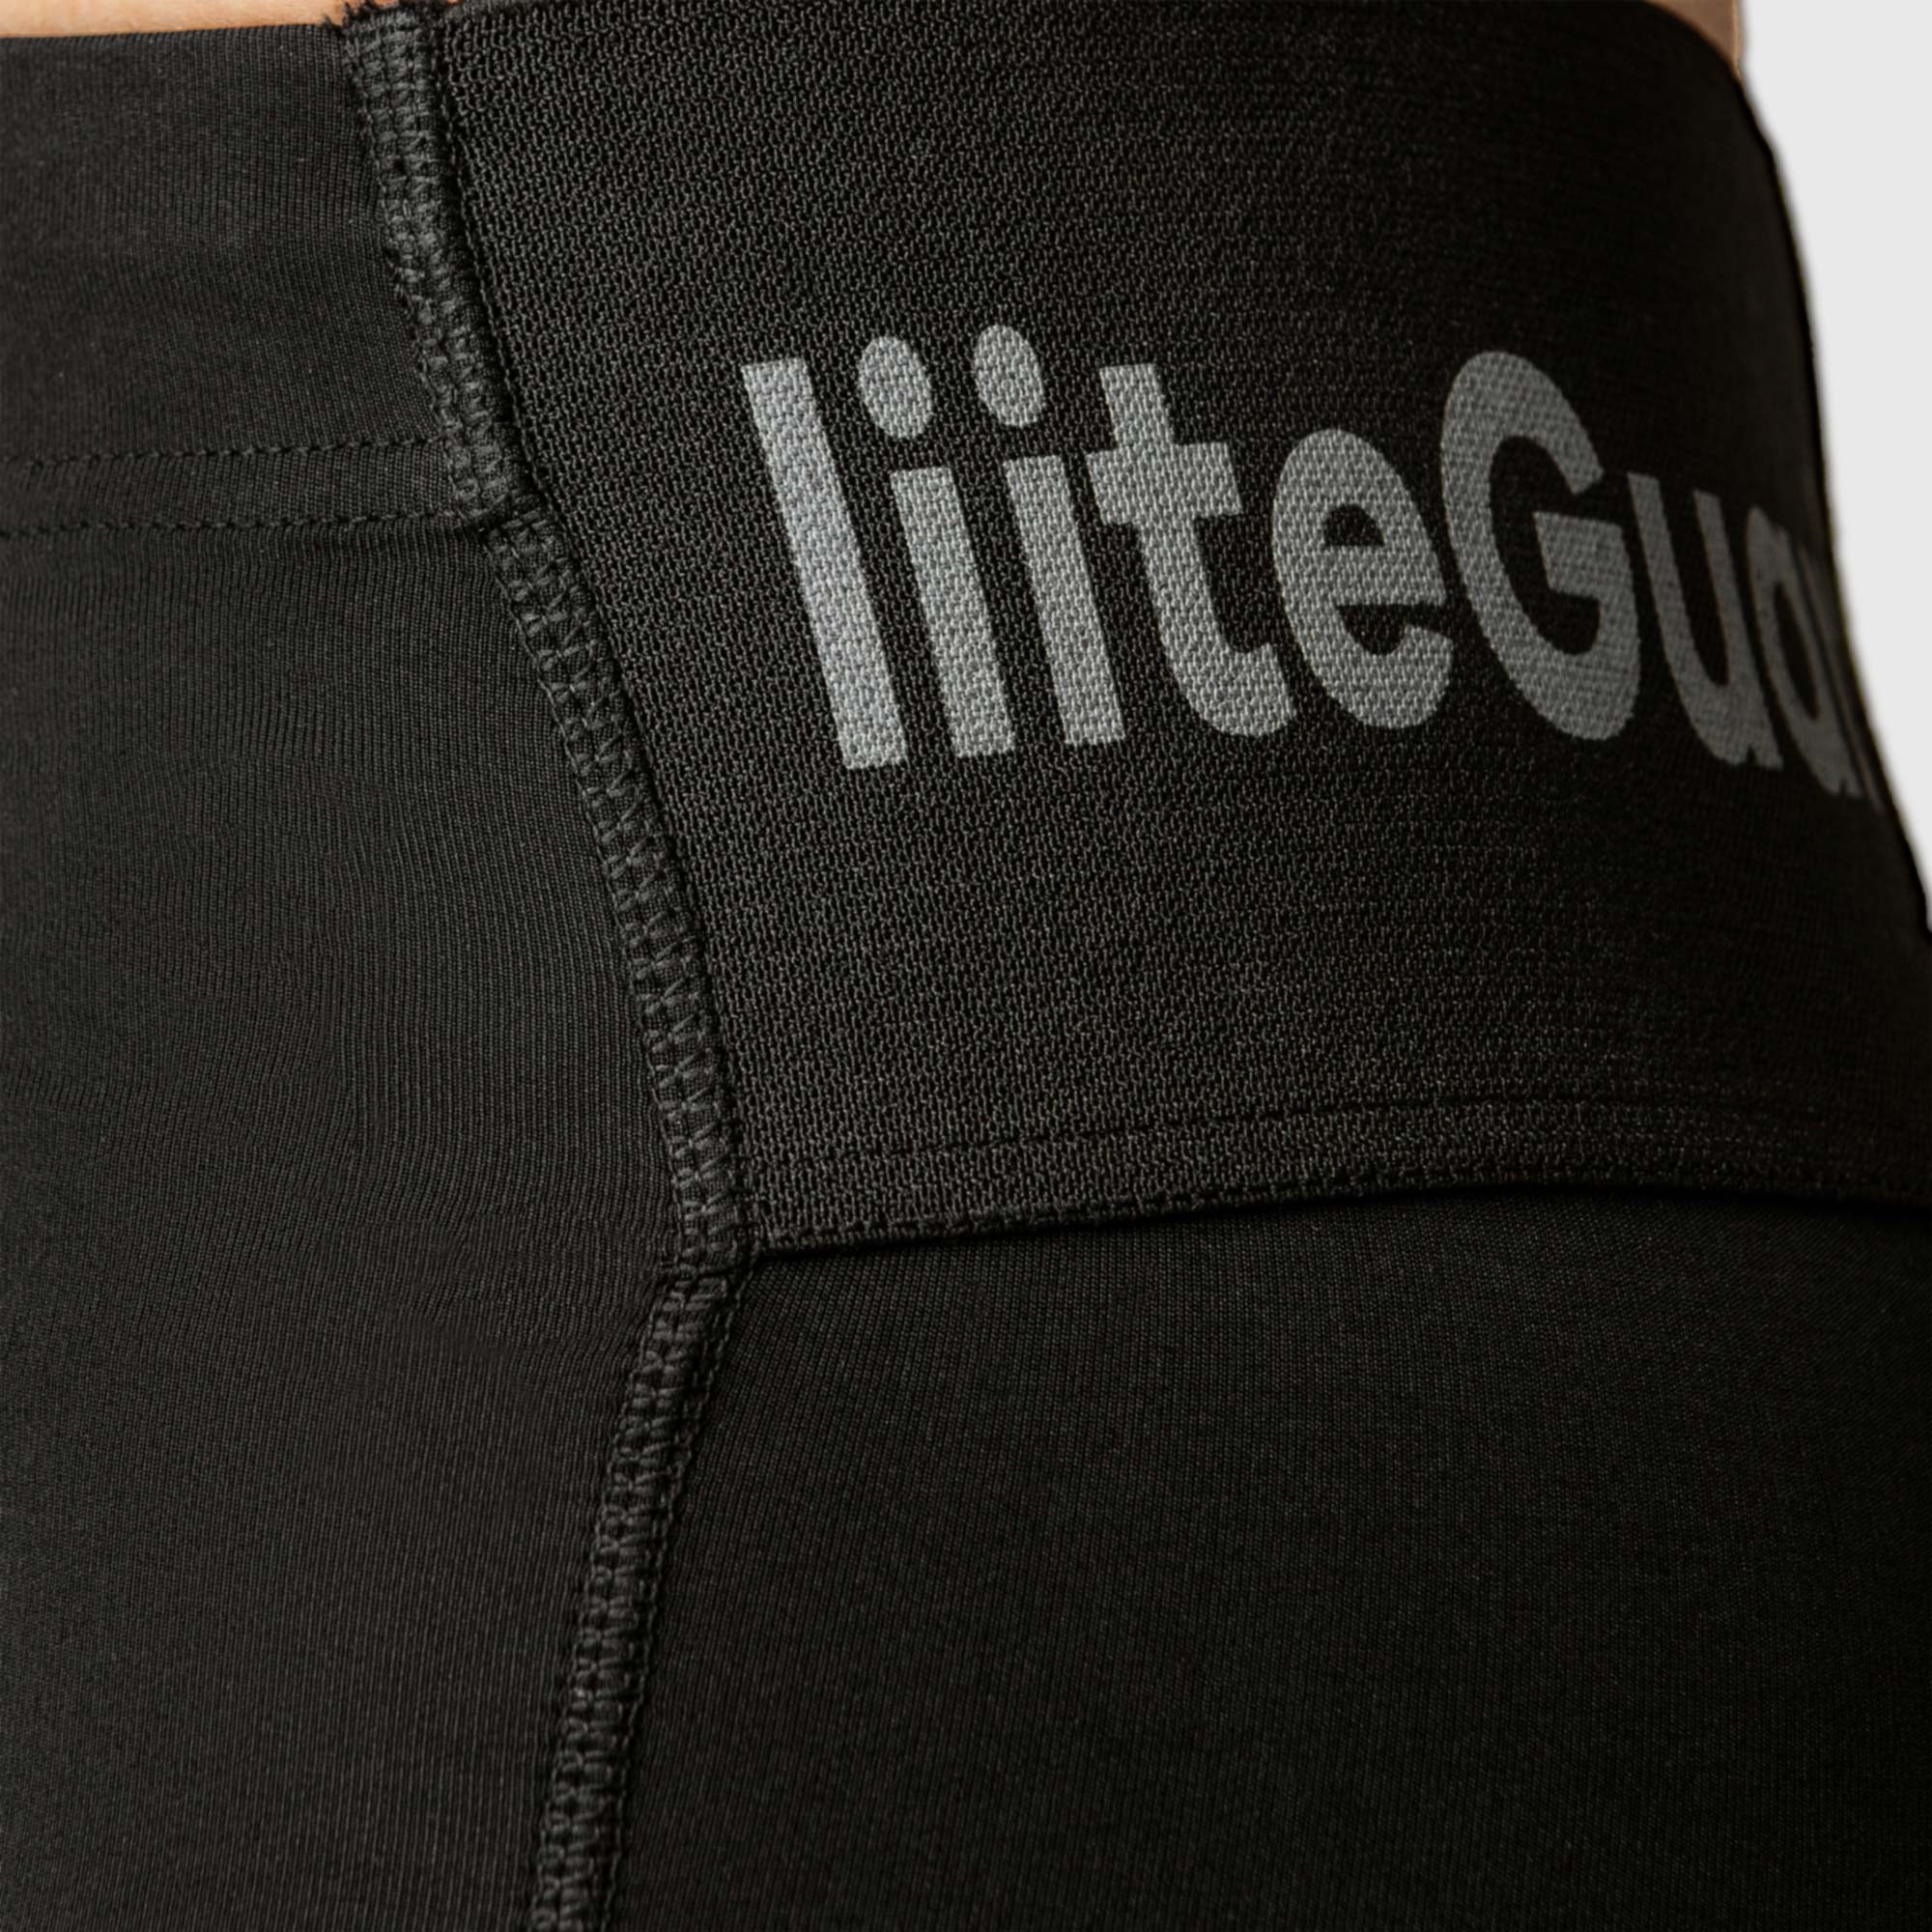 Liiteguard GLU-TECH INNER TIGHT (Women) Compression tights WHITE